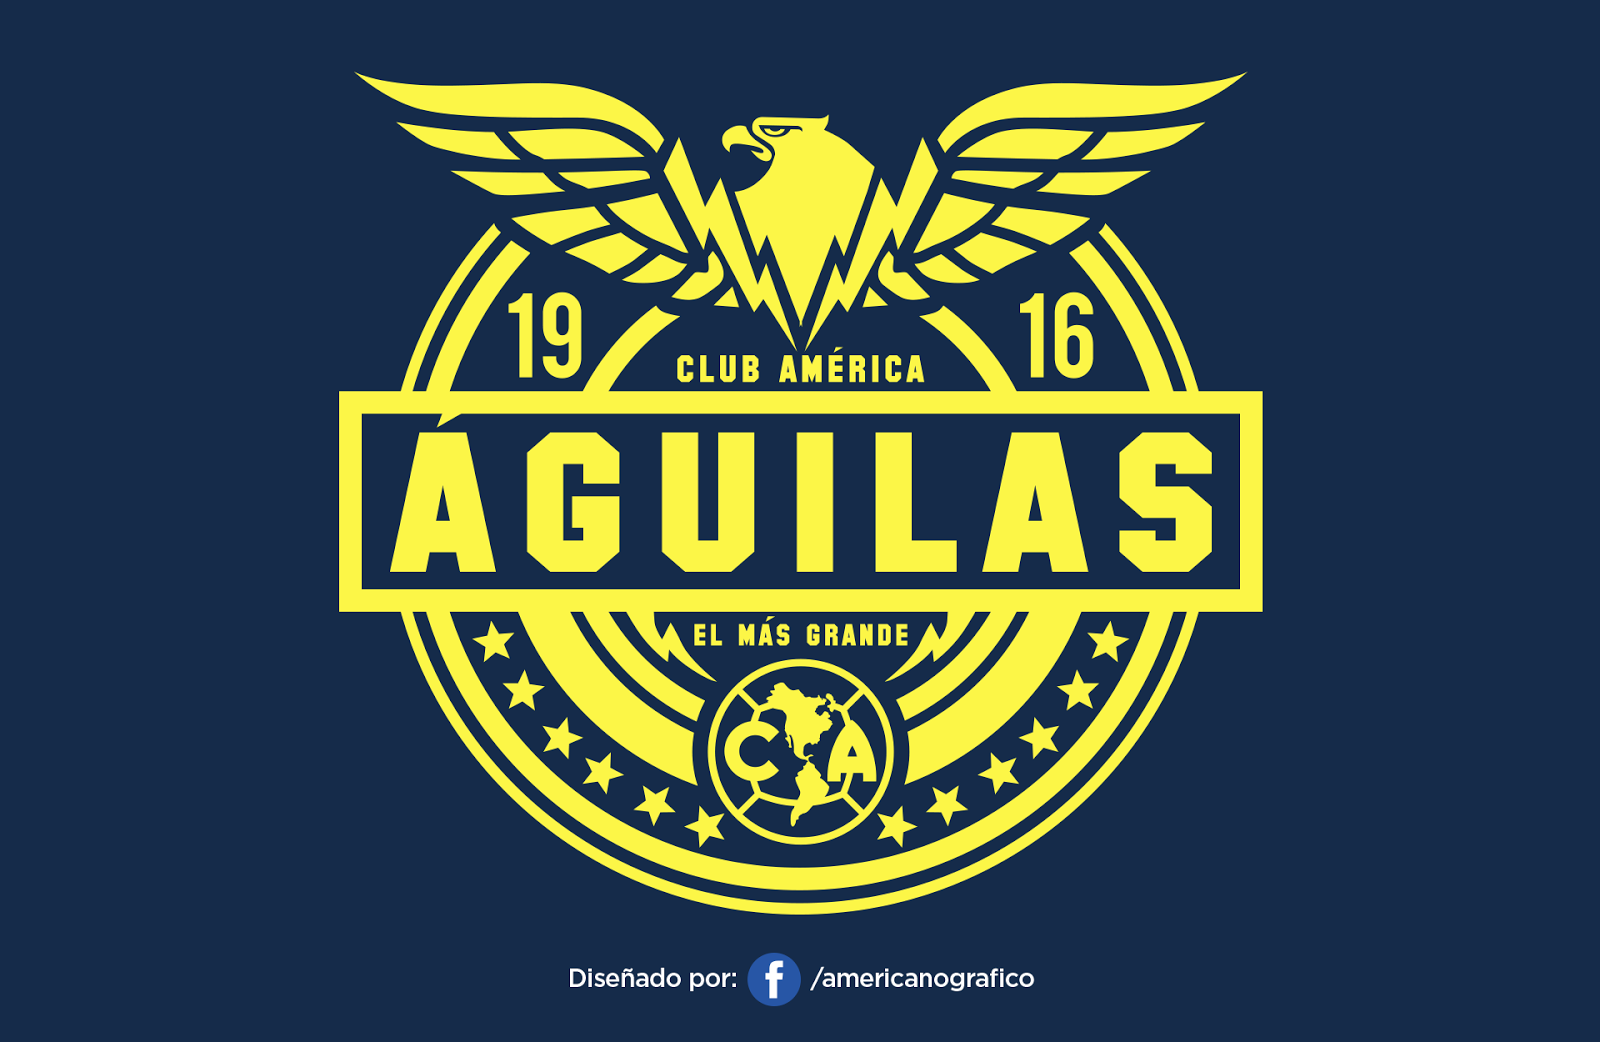 Us 1 club. America клуб. Club America. Клуб Америка ФК. United Schutzhund Clubs of America logo.